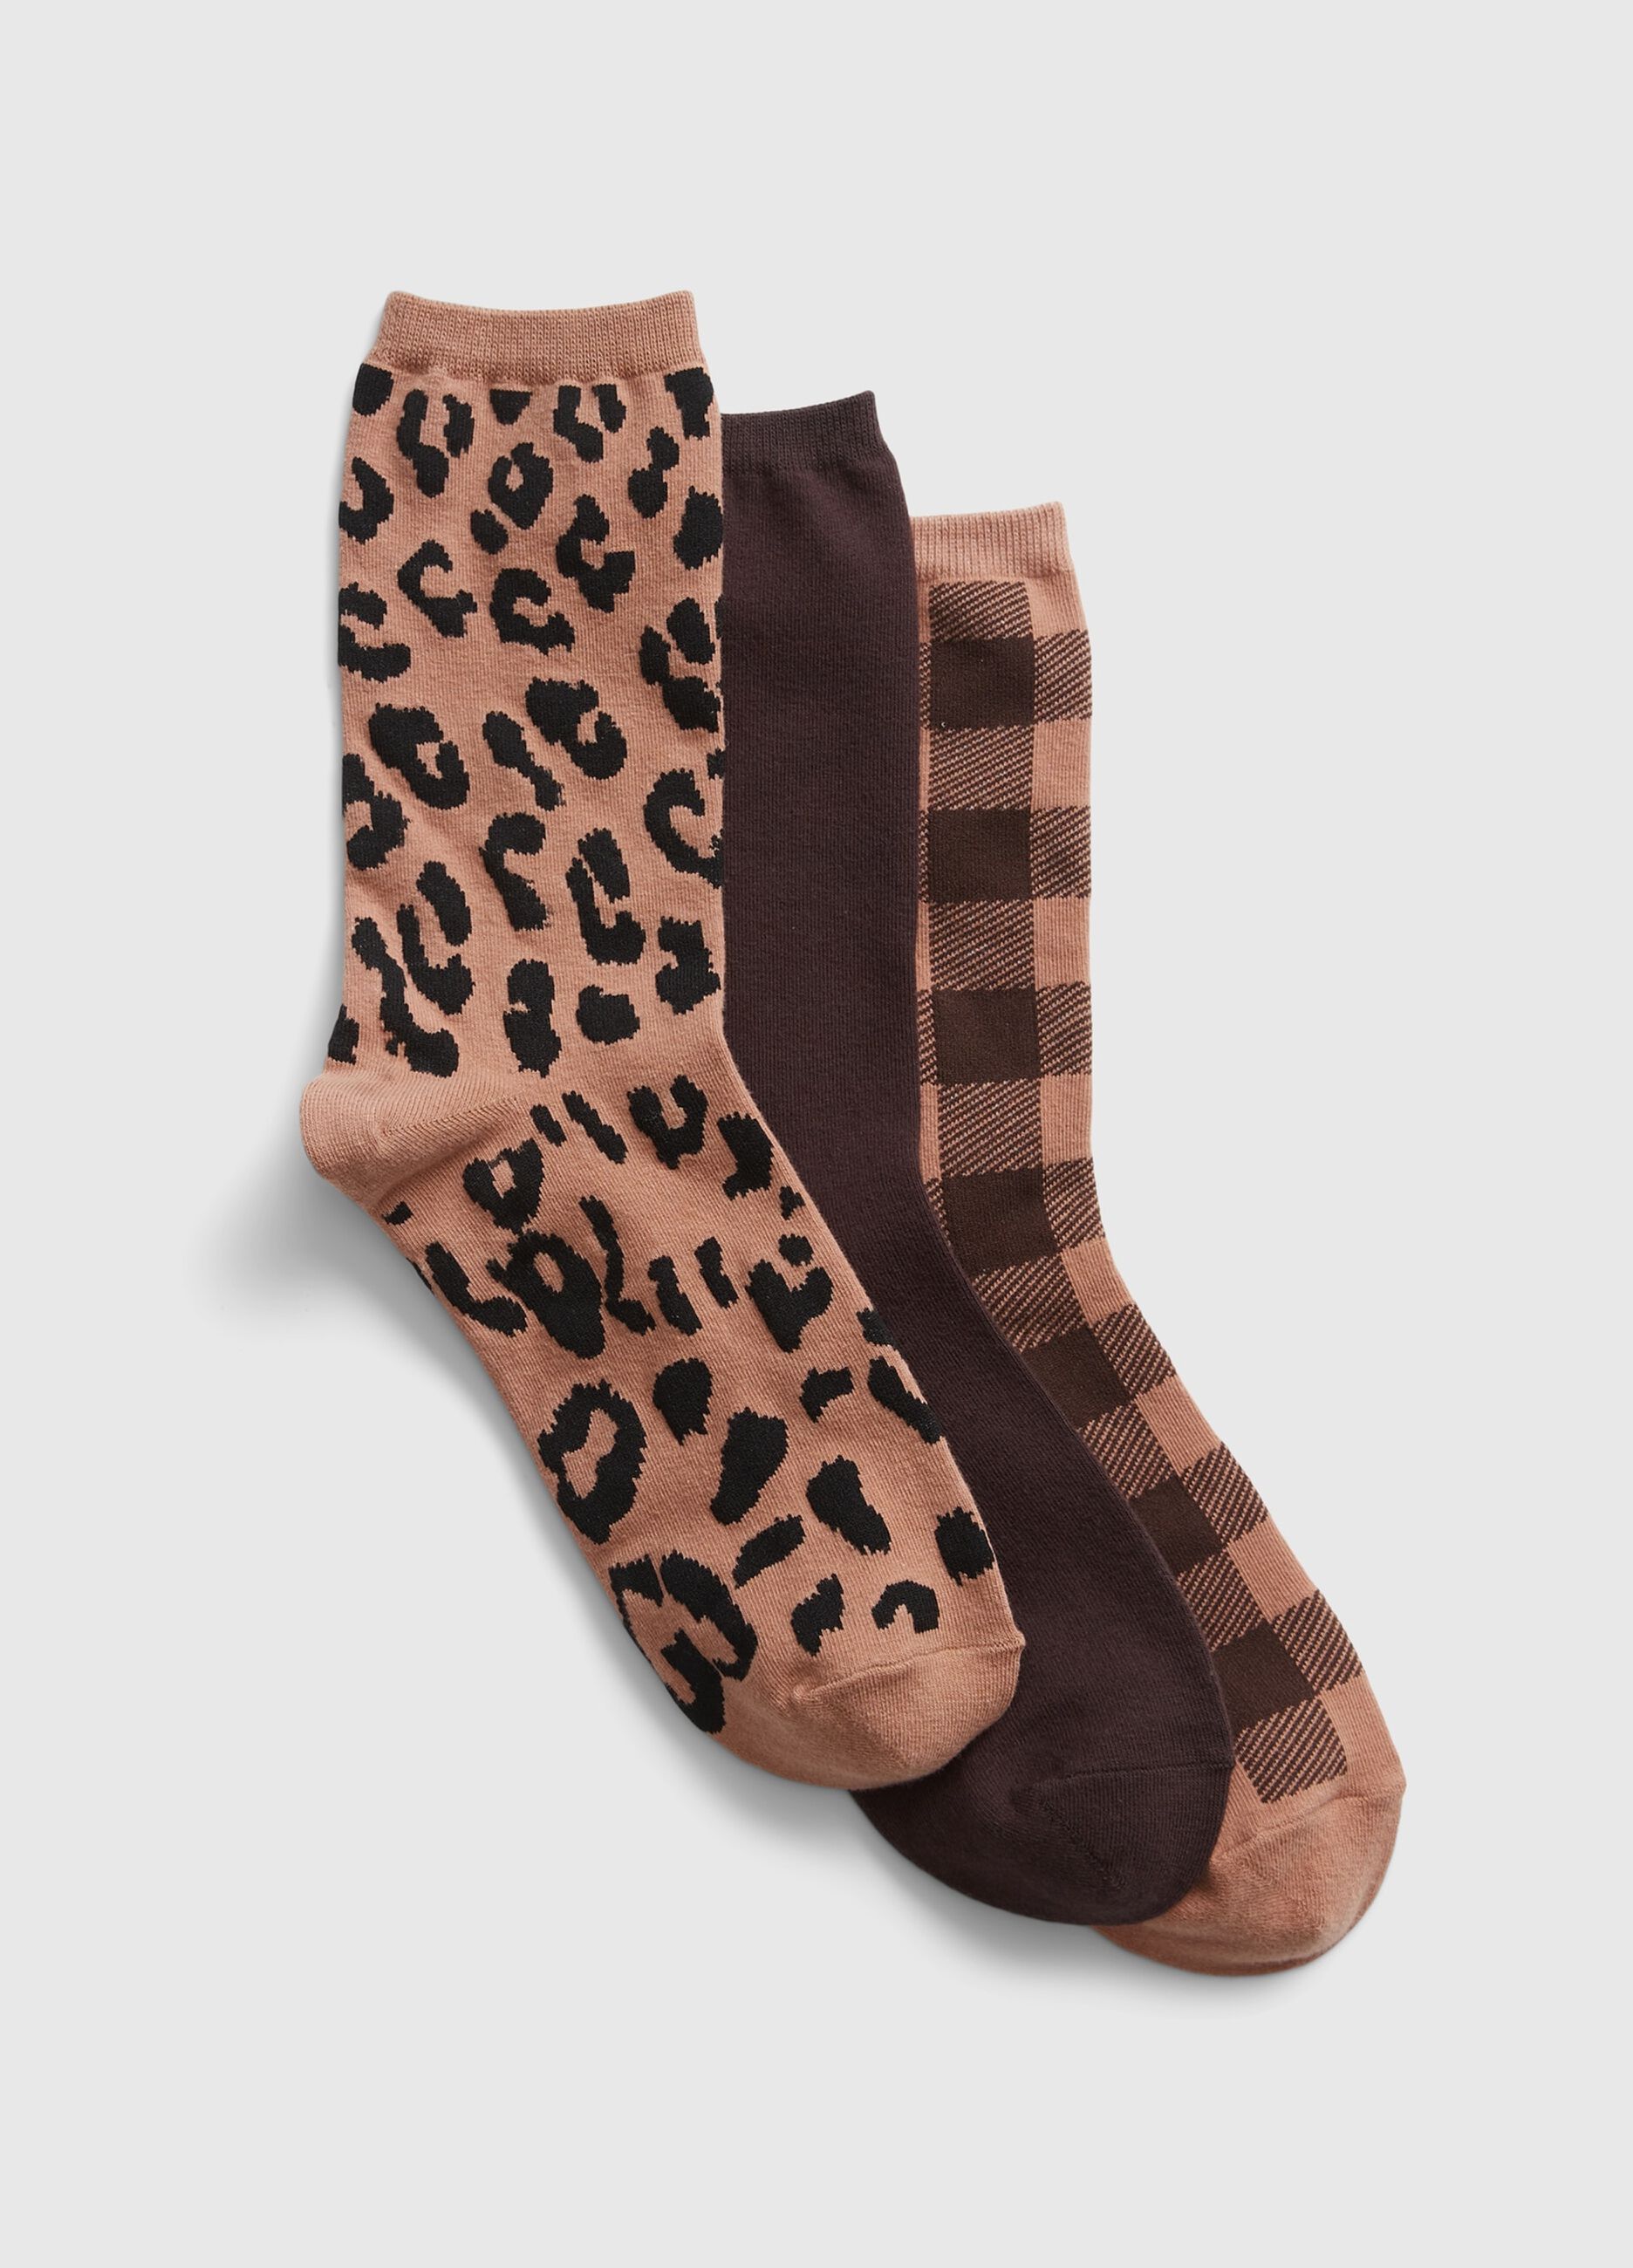 Three-pair pack socks with animal print pattern